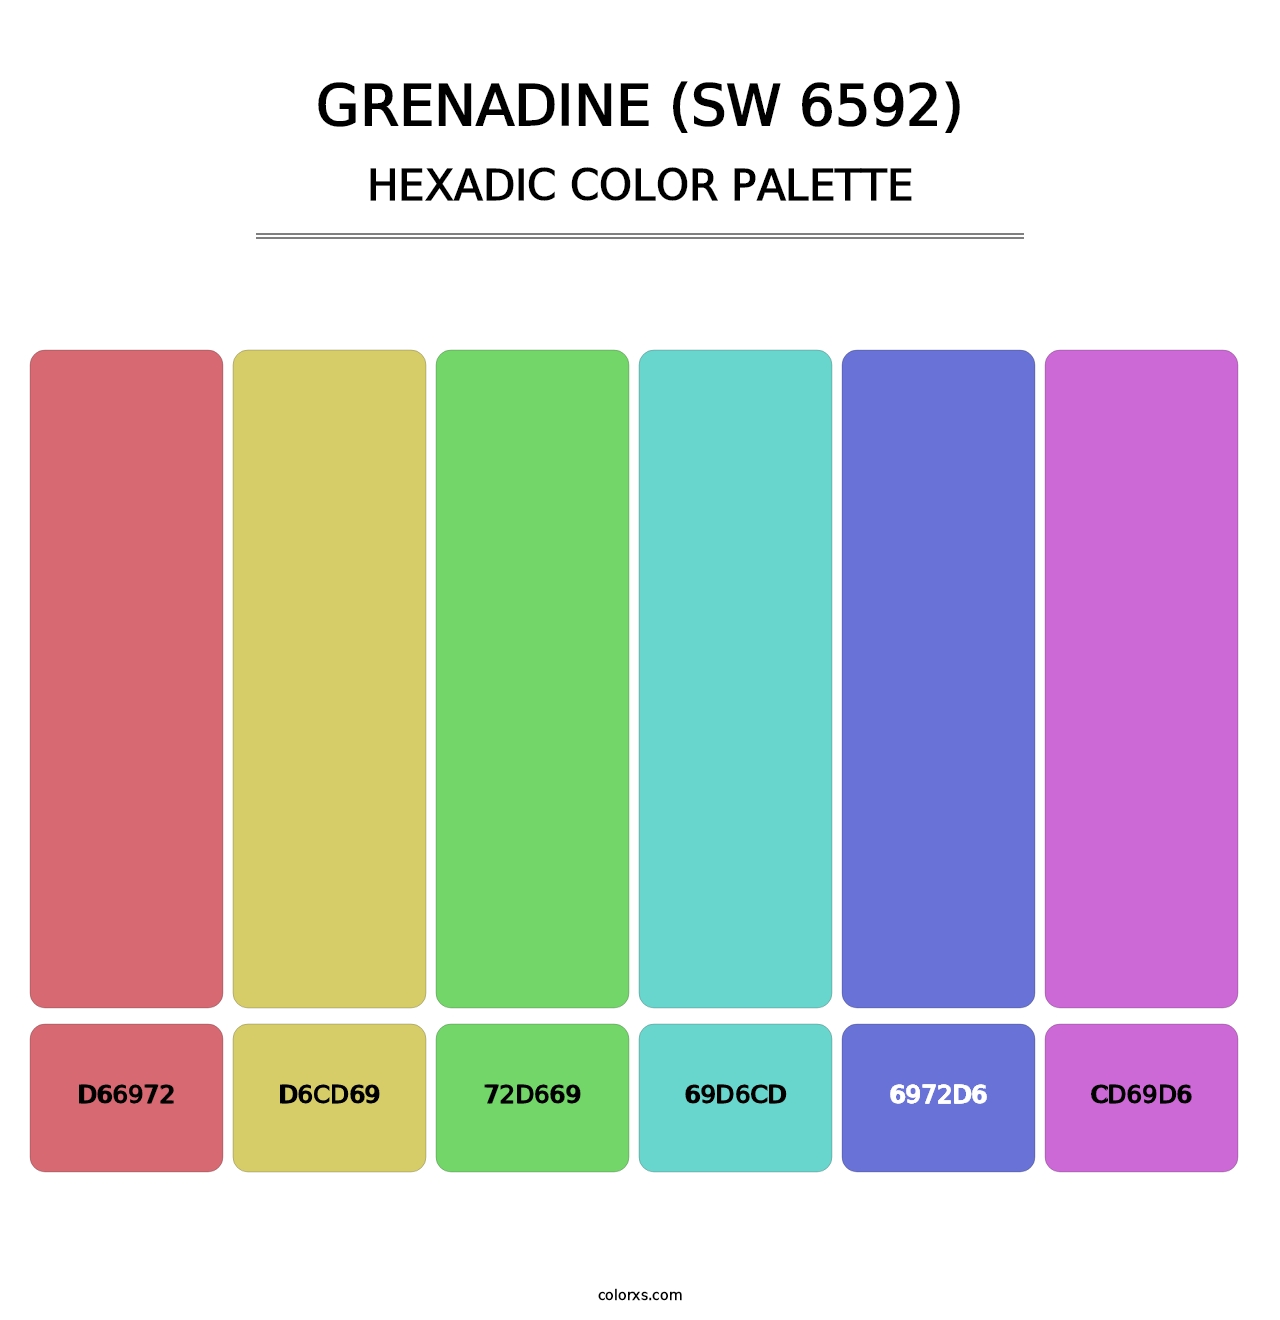 Grenadine (SW 6592) - Hexadic Color Palette